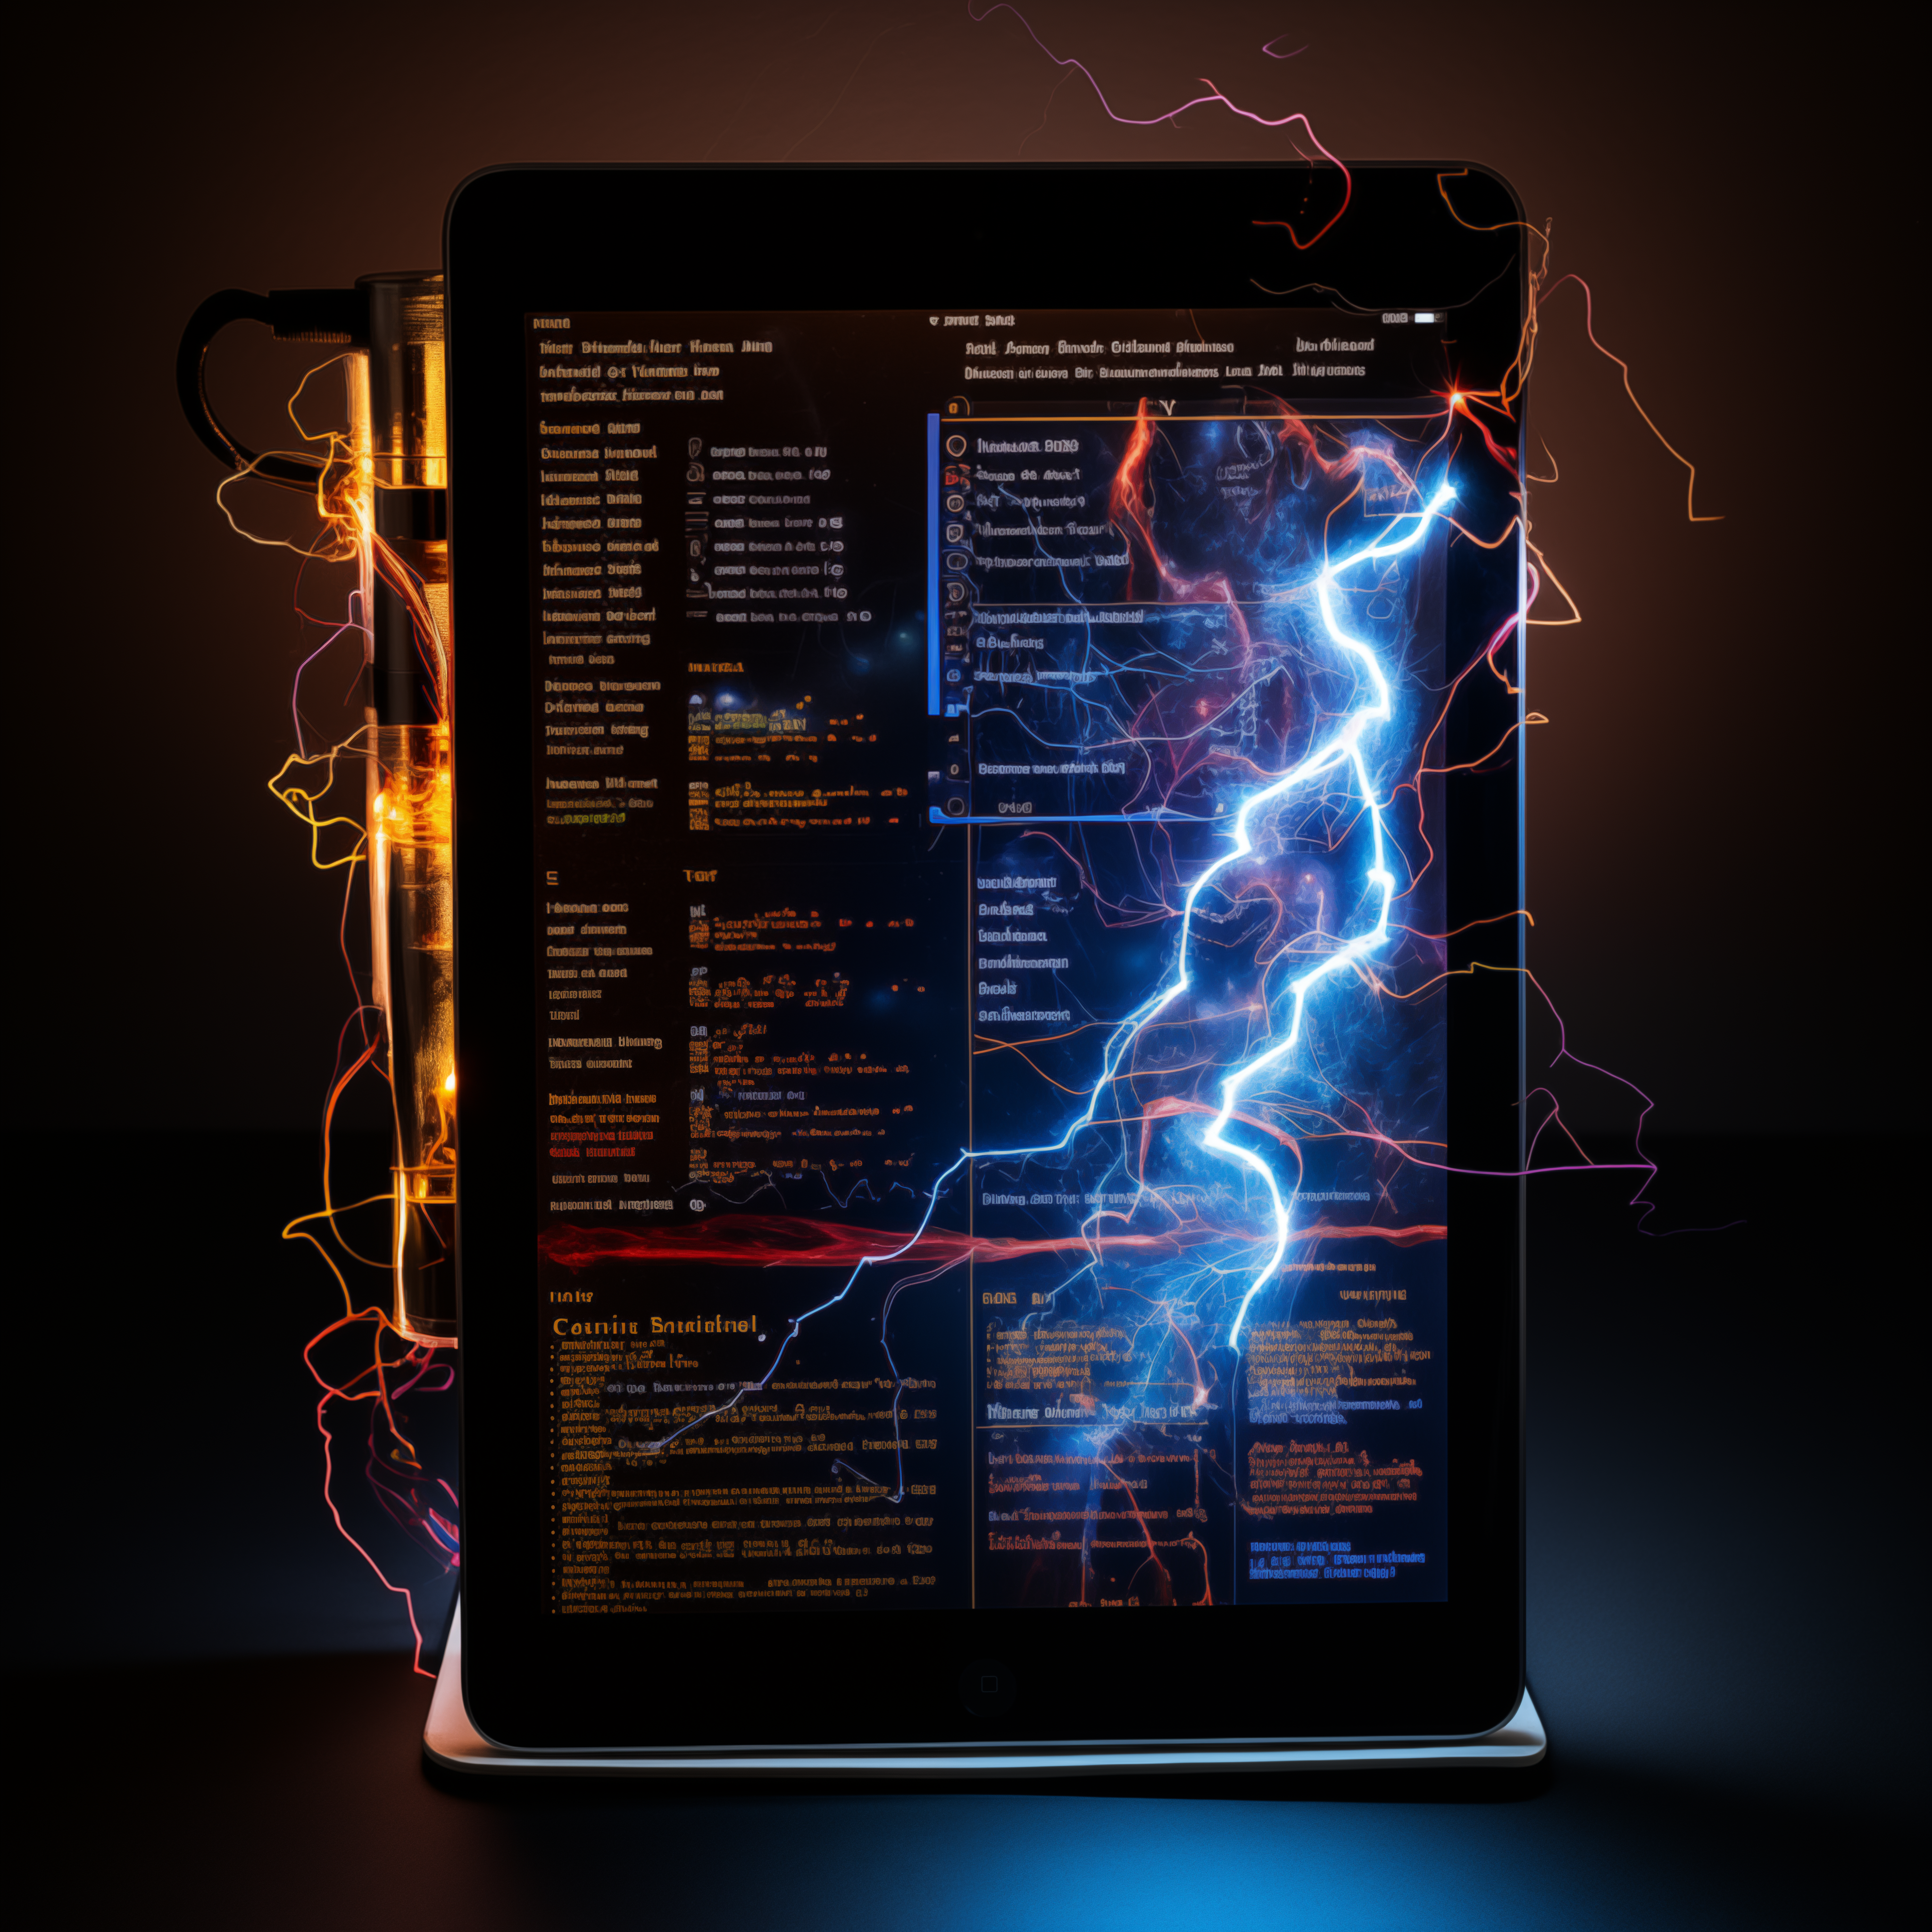 An order book based on Lightning